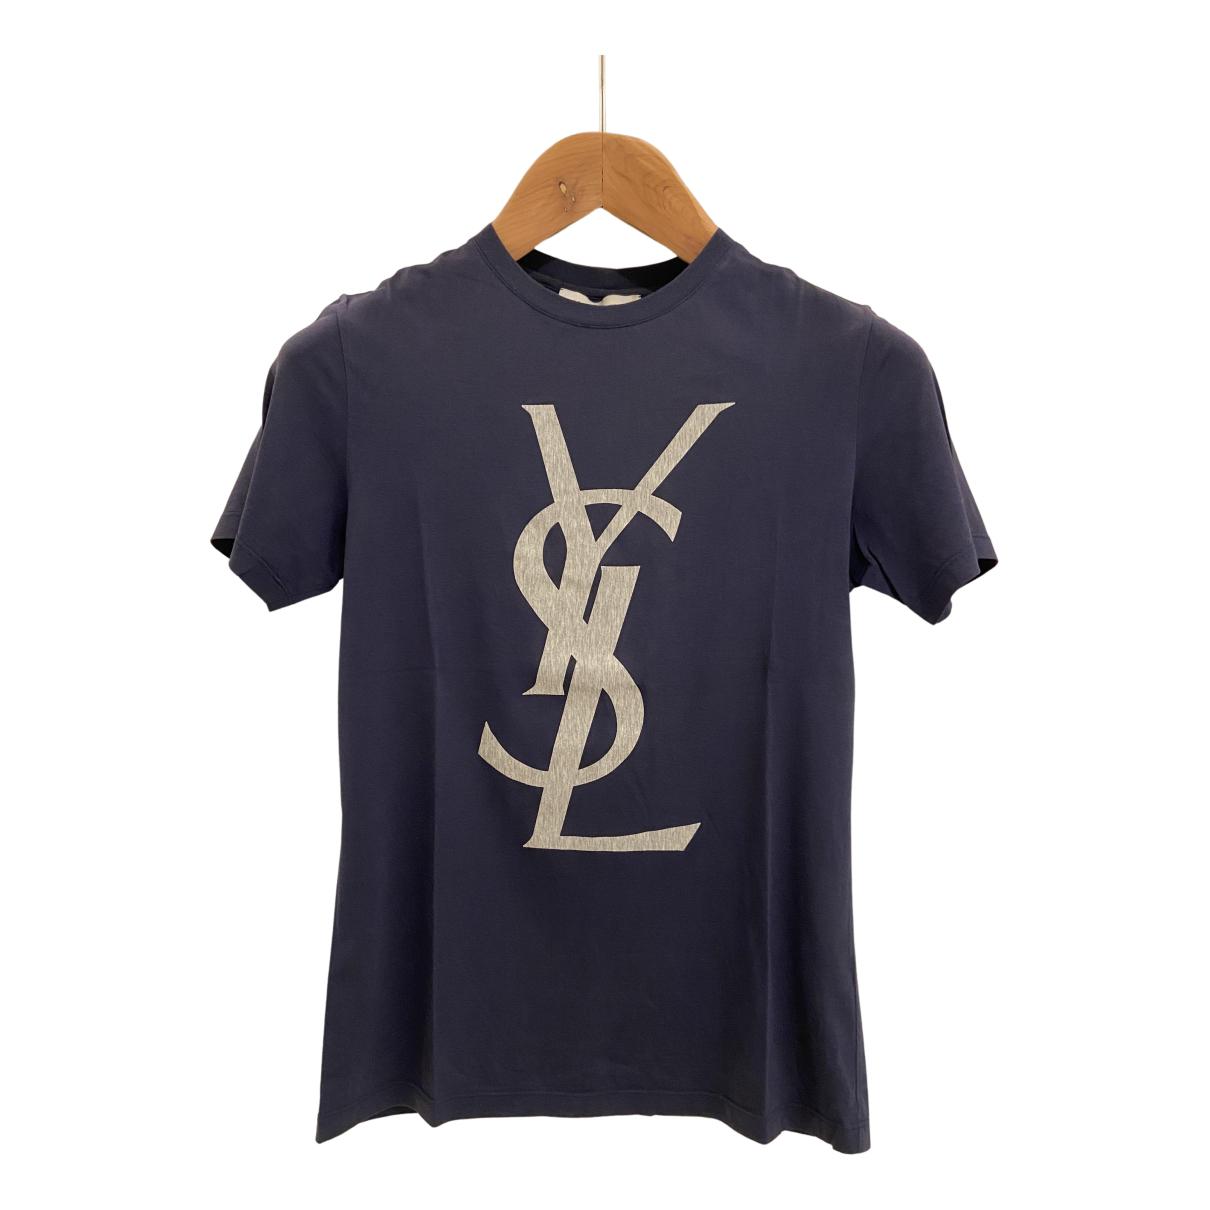 T-shirt Yves Saint Laurent Navy size XS International in Cotton - 29971816